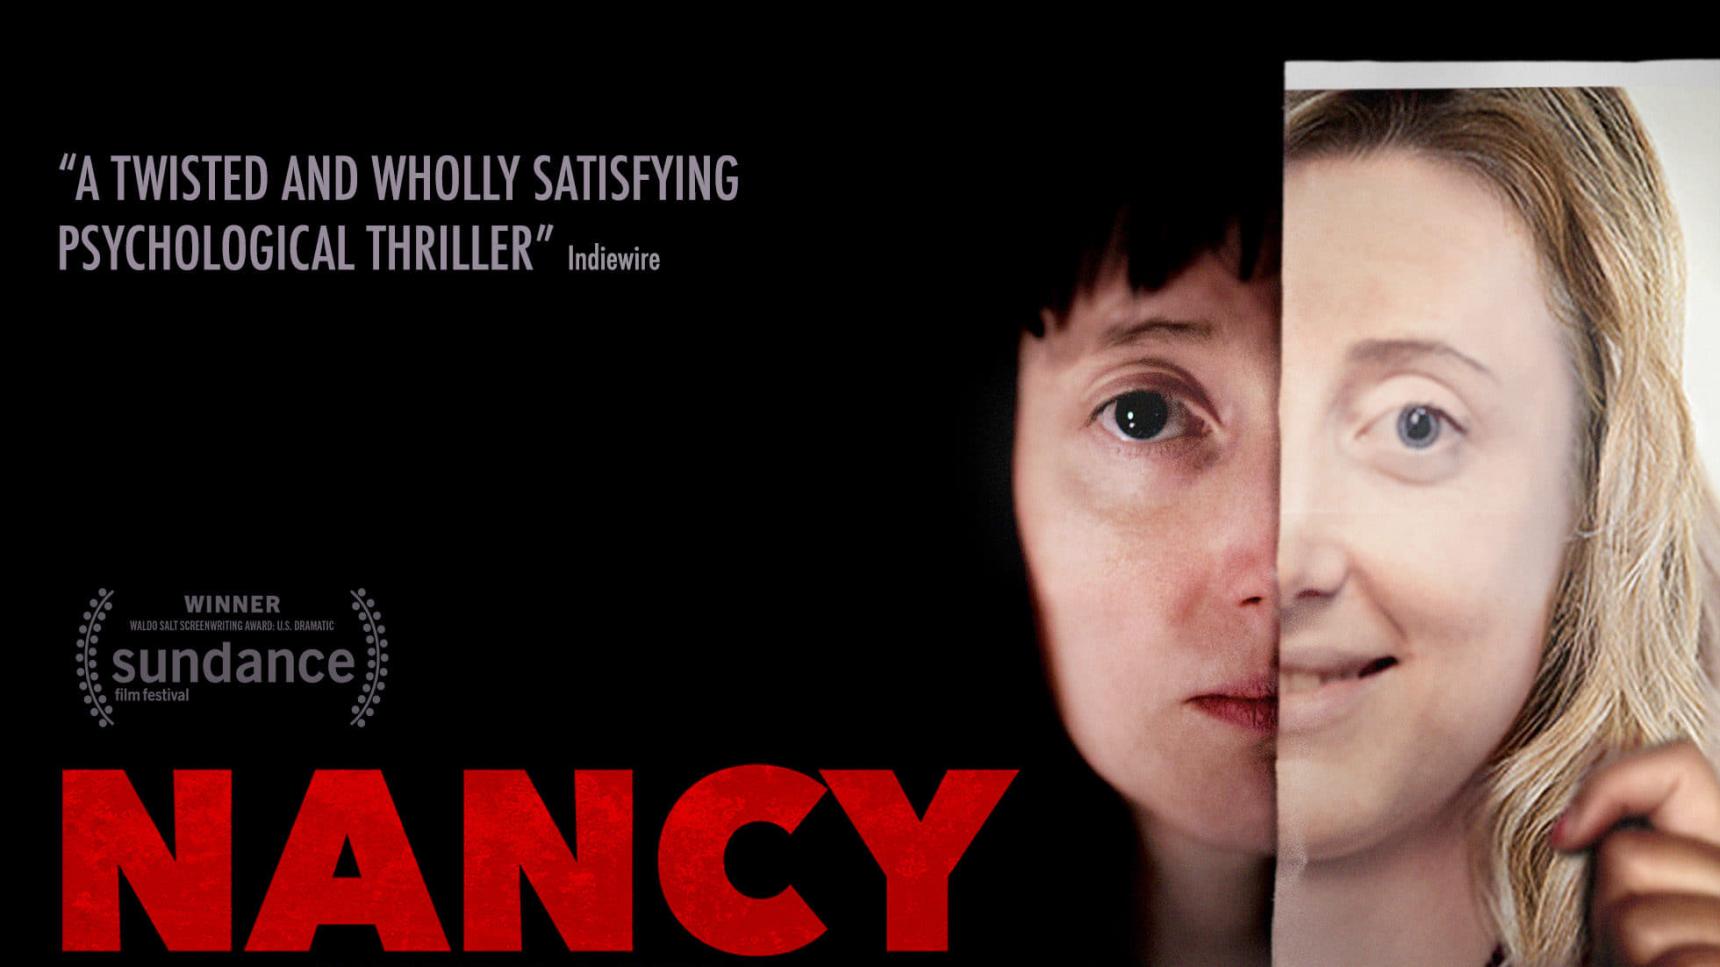 Fondo de pantalla de la película Nancy en SeriesYonkis2 gratis